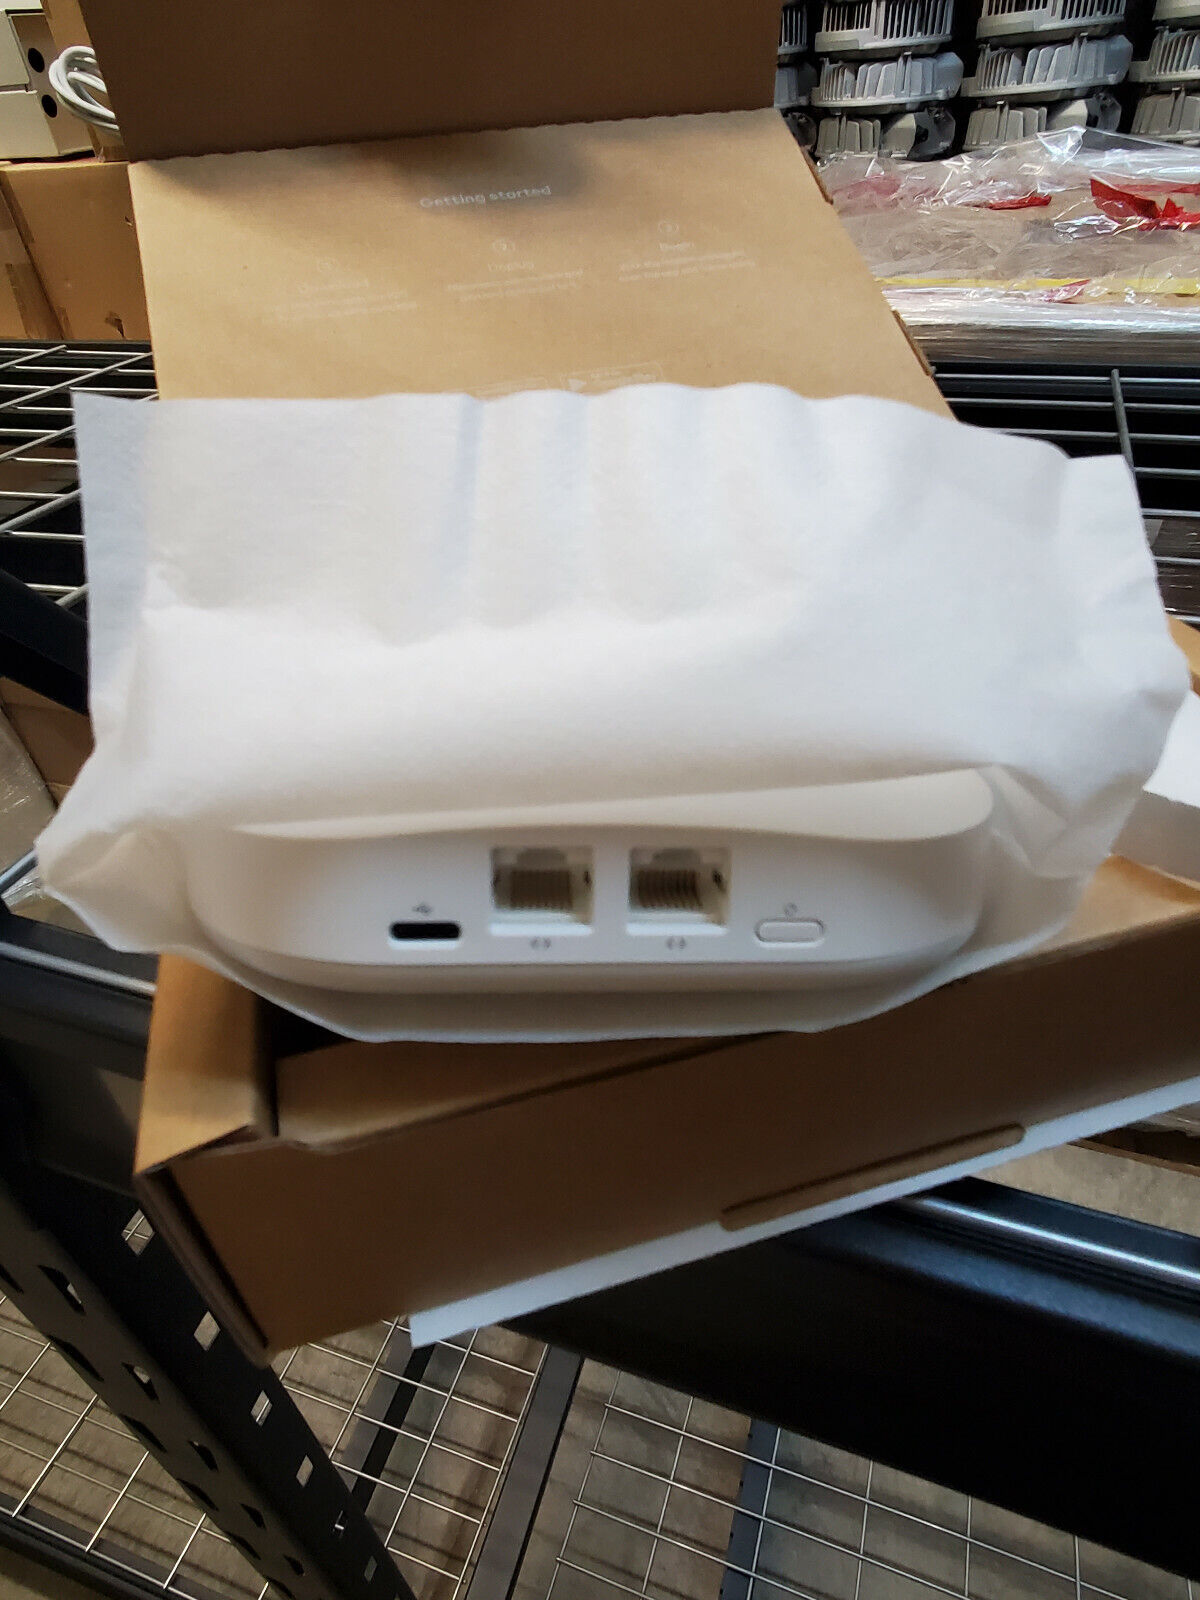 Eero Wi-Fi router B011101 LOT OF 6 UNITS- New in box eero B011101 - фотография #3